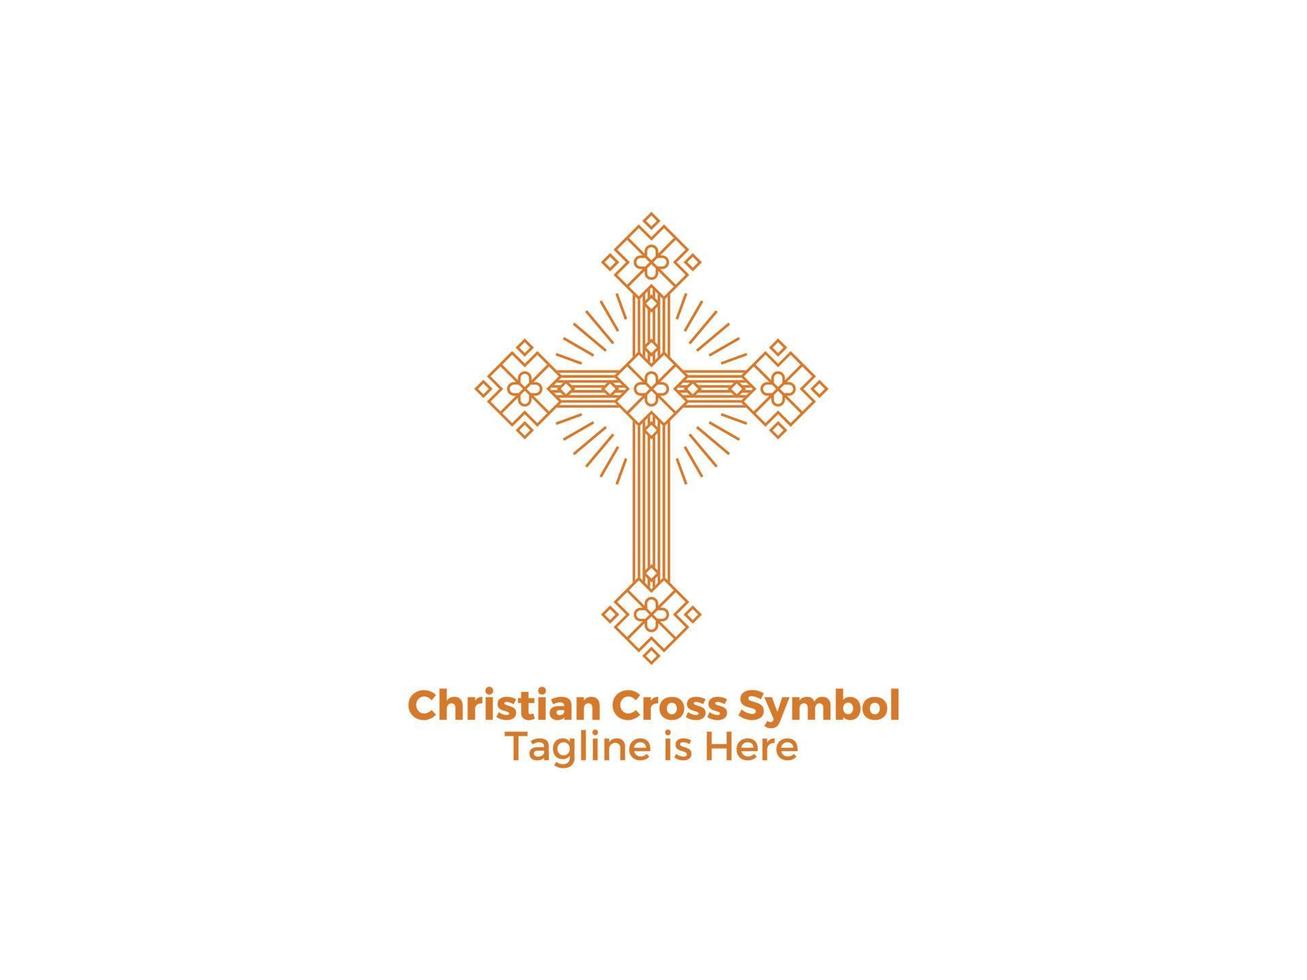 icono de cruz de catolicismo cristiano de religión ornamental aislado en vector libre de fondo blanco